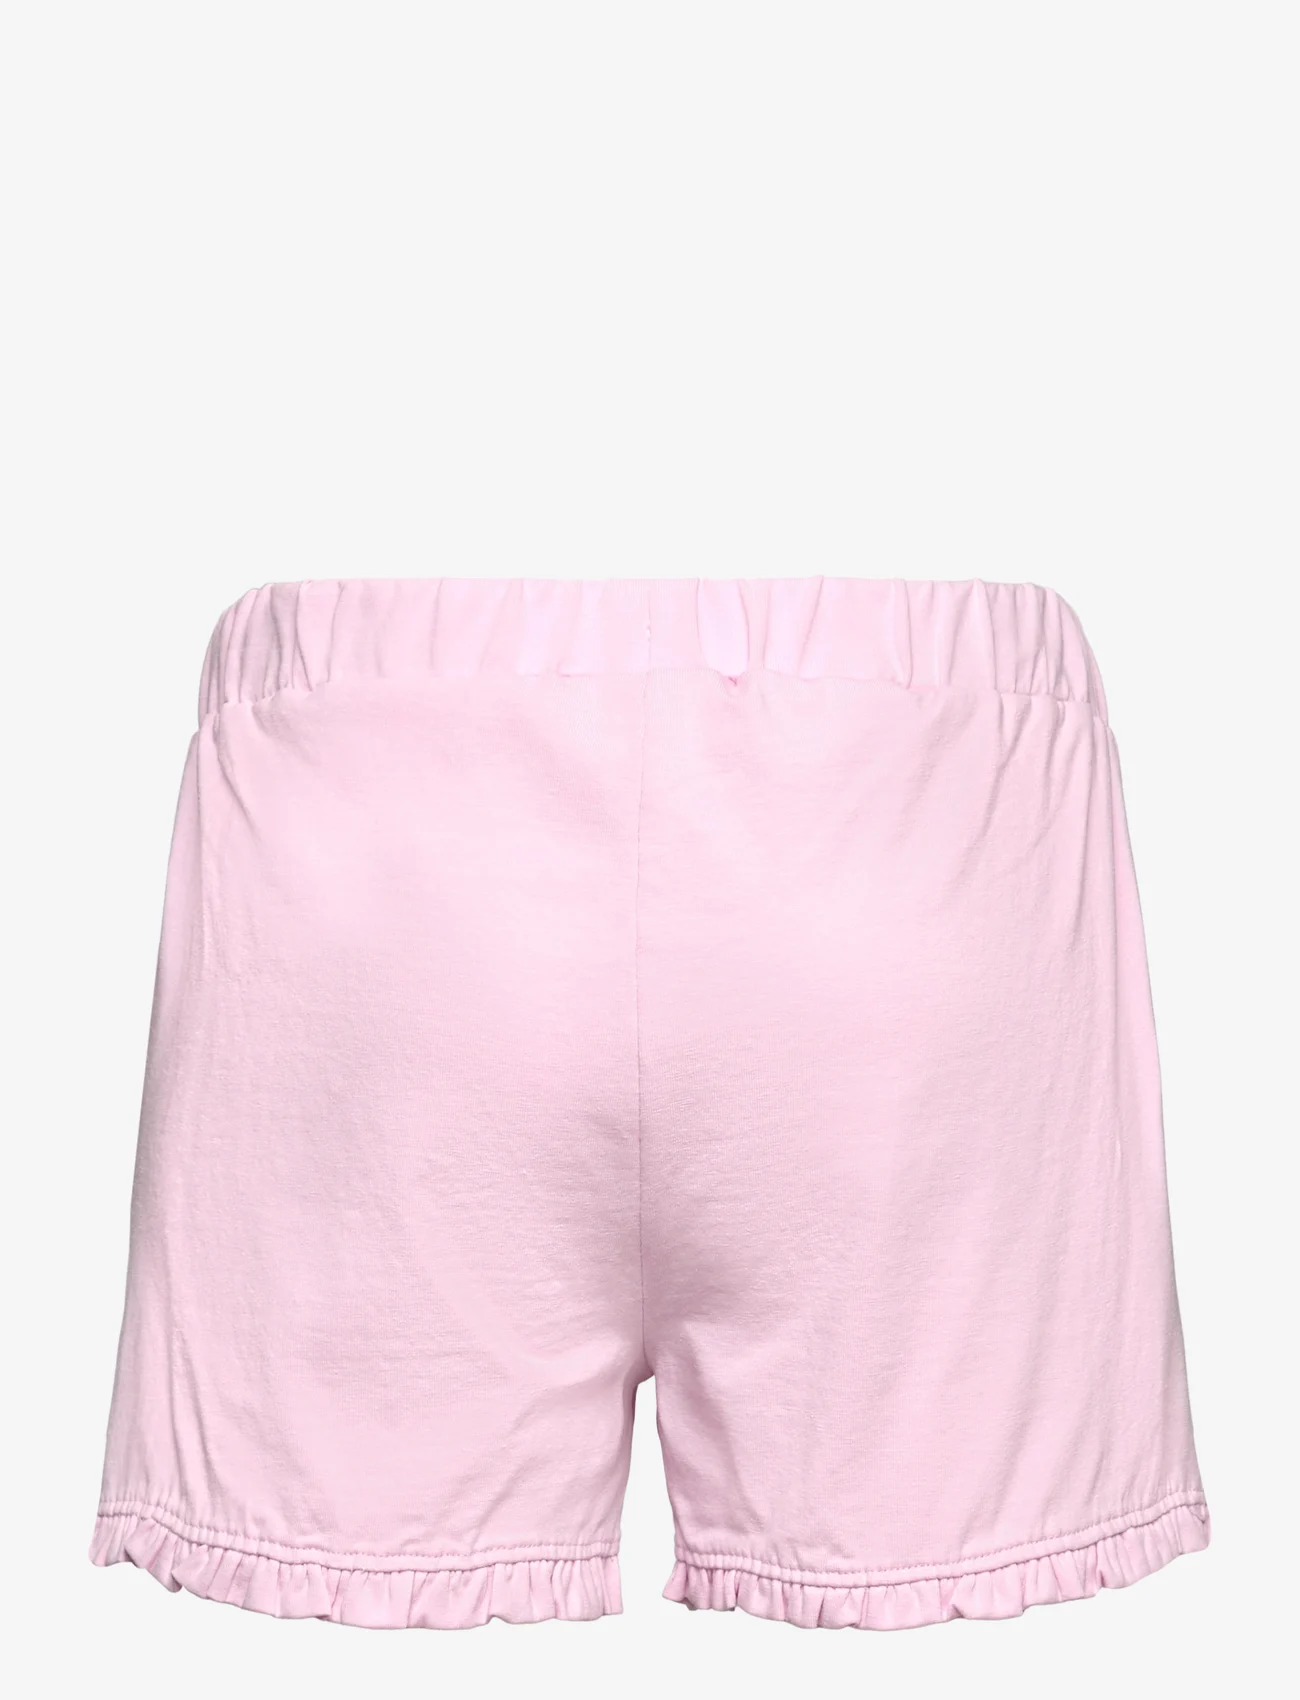 Minymo - Shorts - sweatshorts - pink tulle - 1